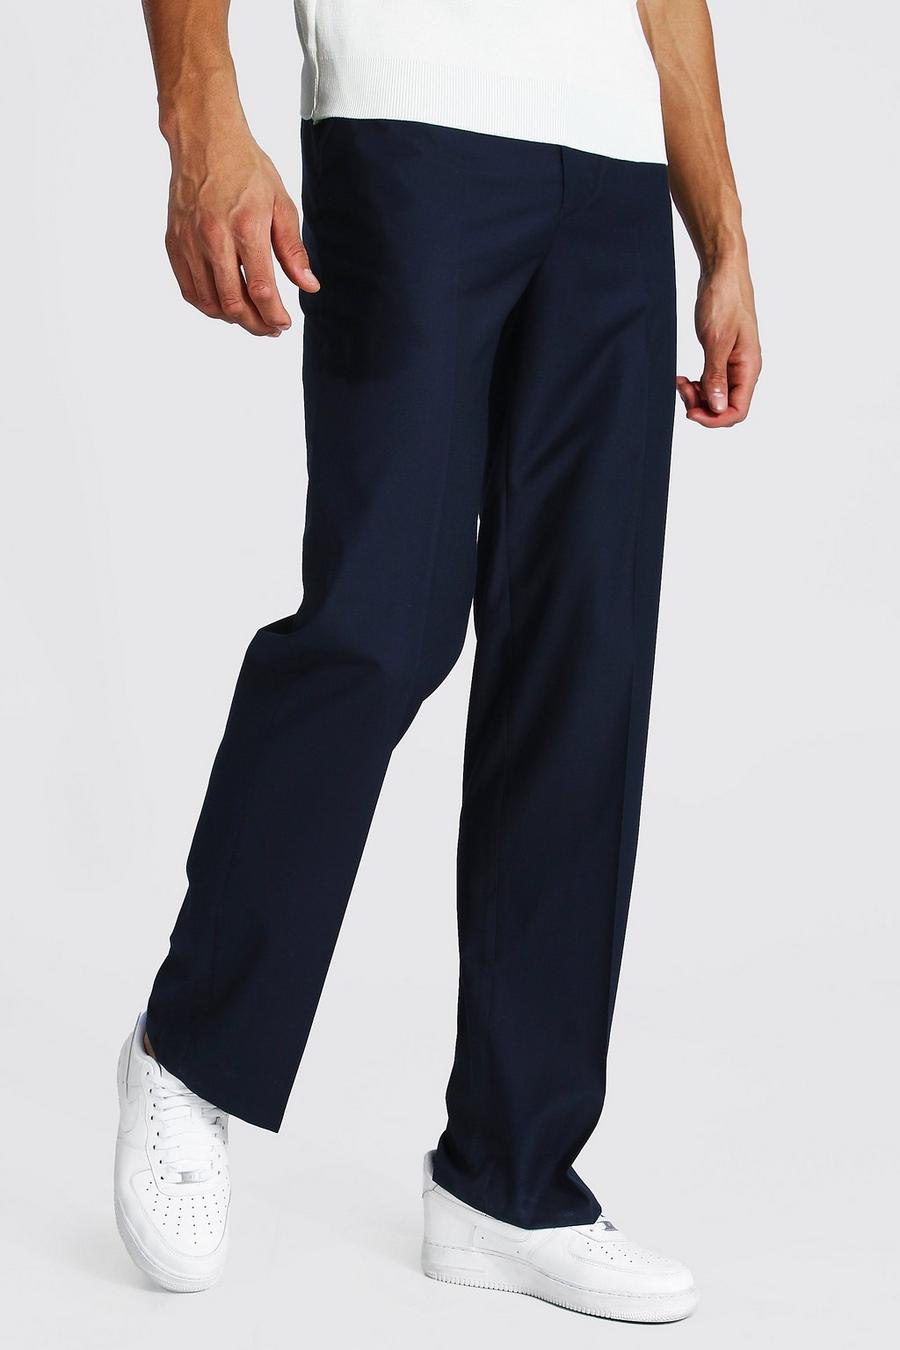 Pantalon coupe droite Tall, Marine navy image number 1